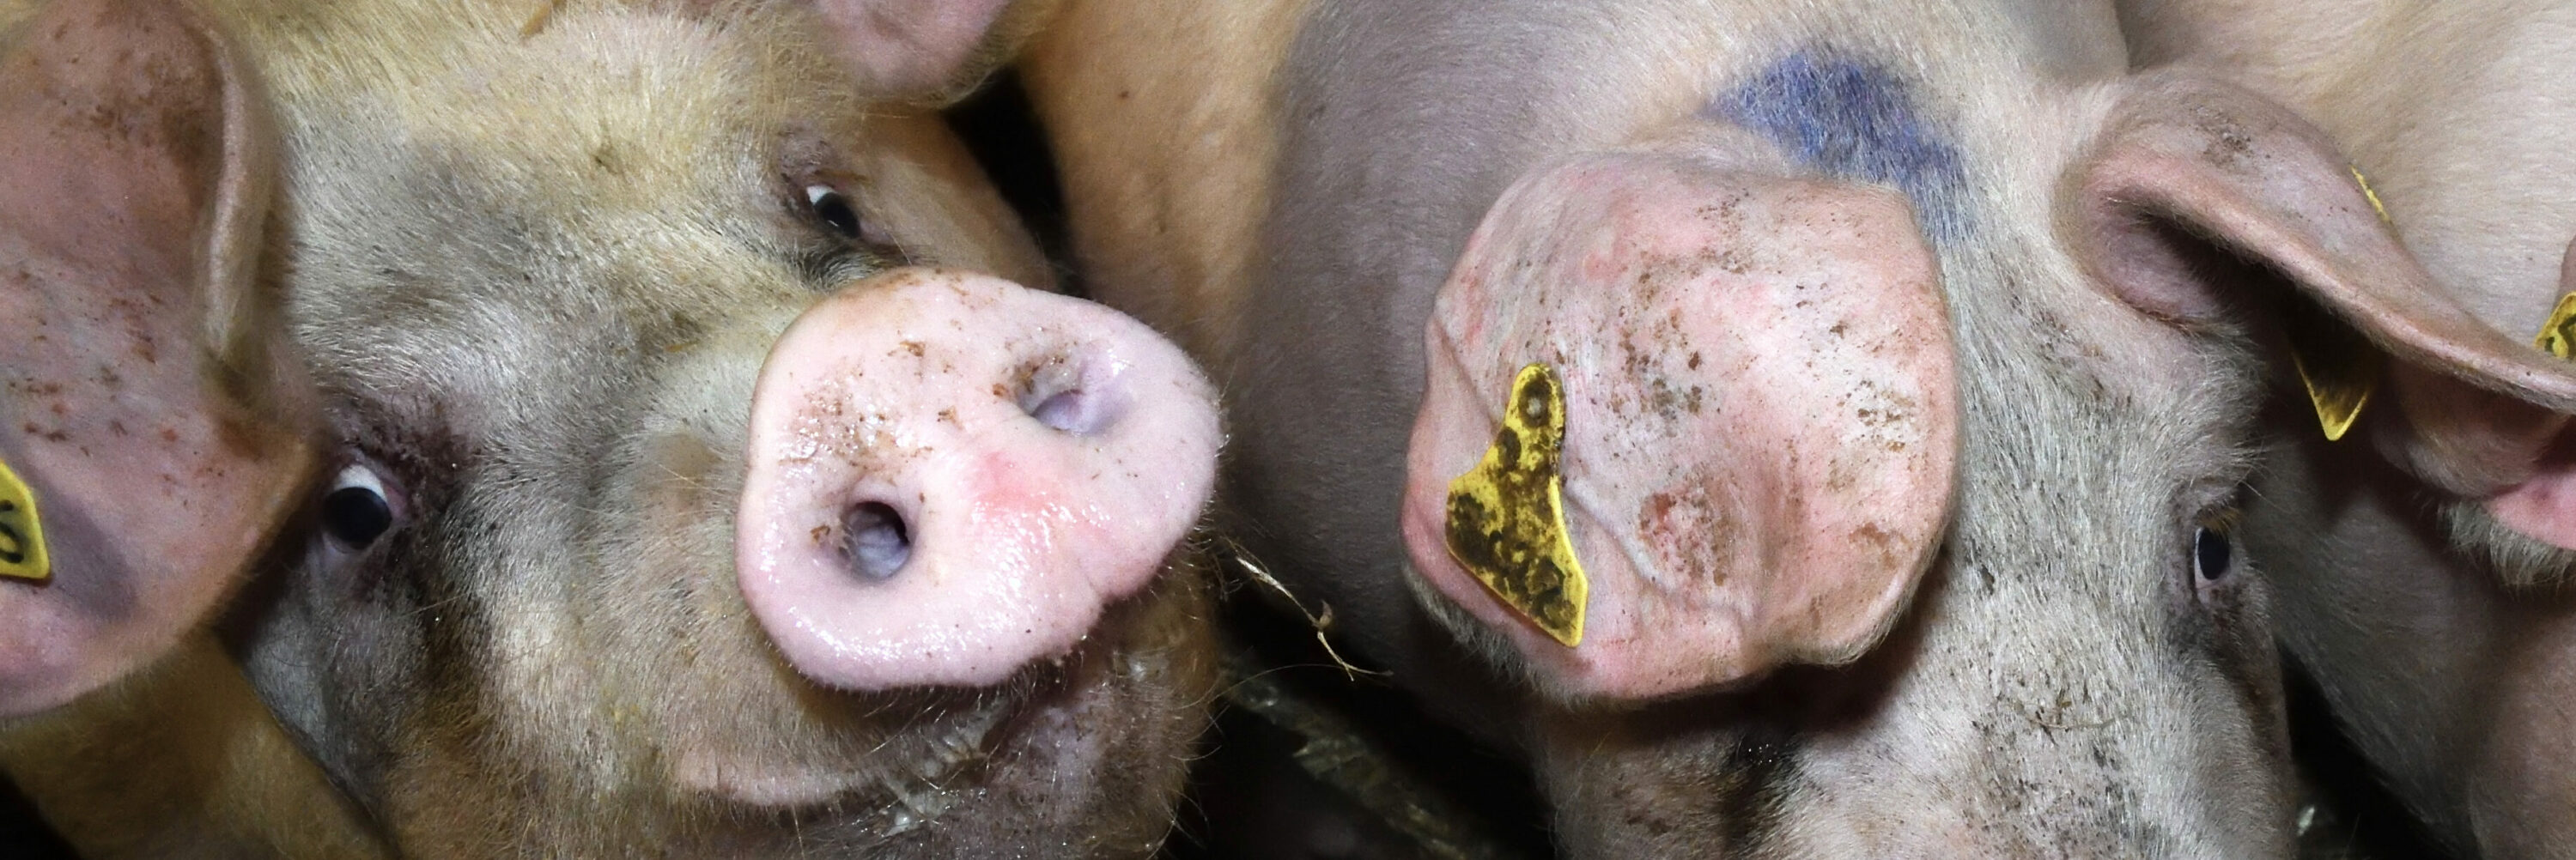 Fir Tree Pig Farm - Animal Equality